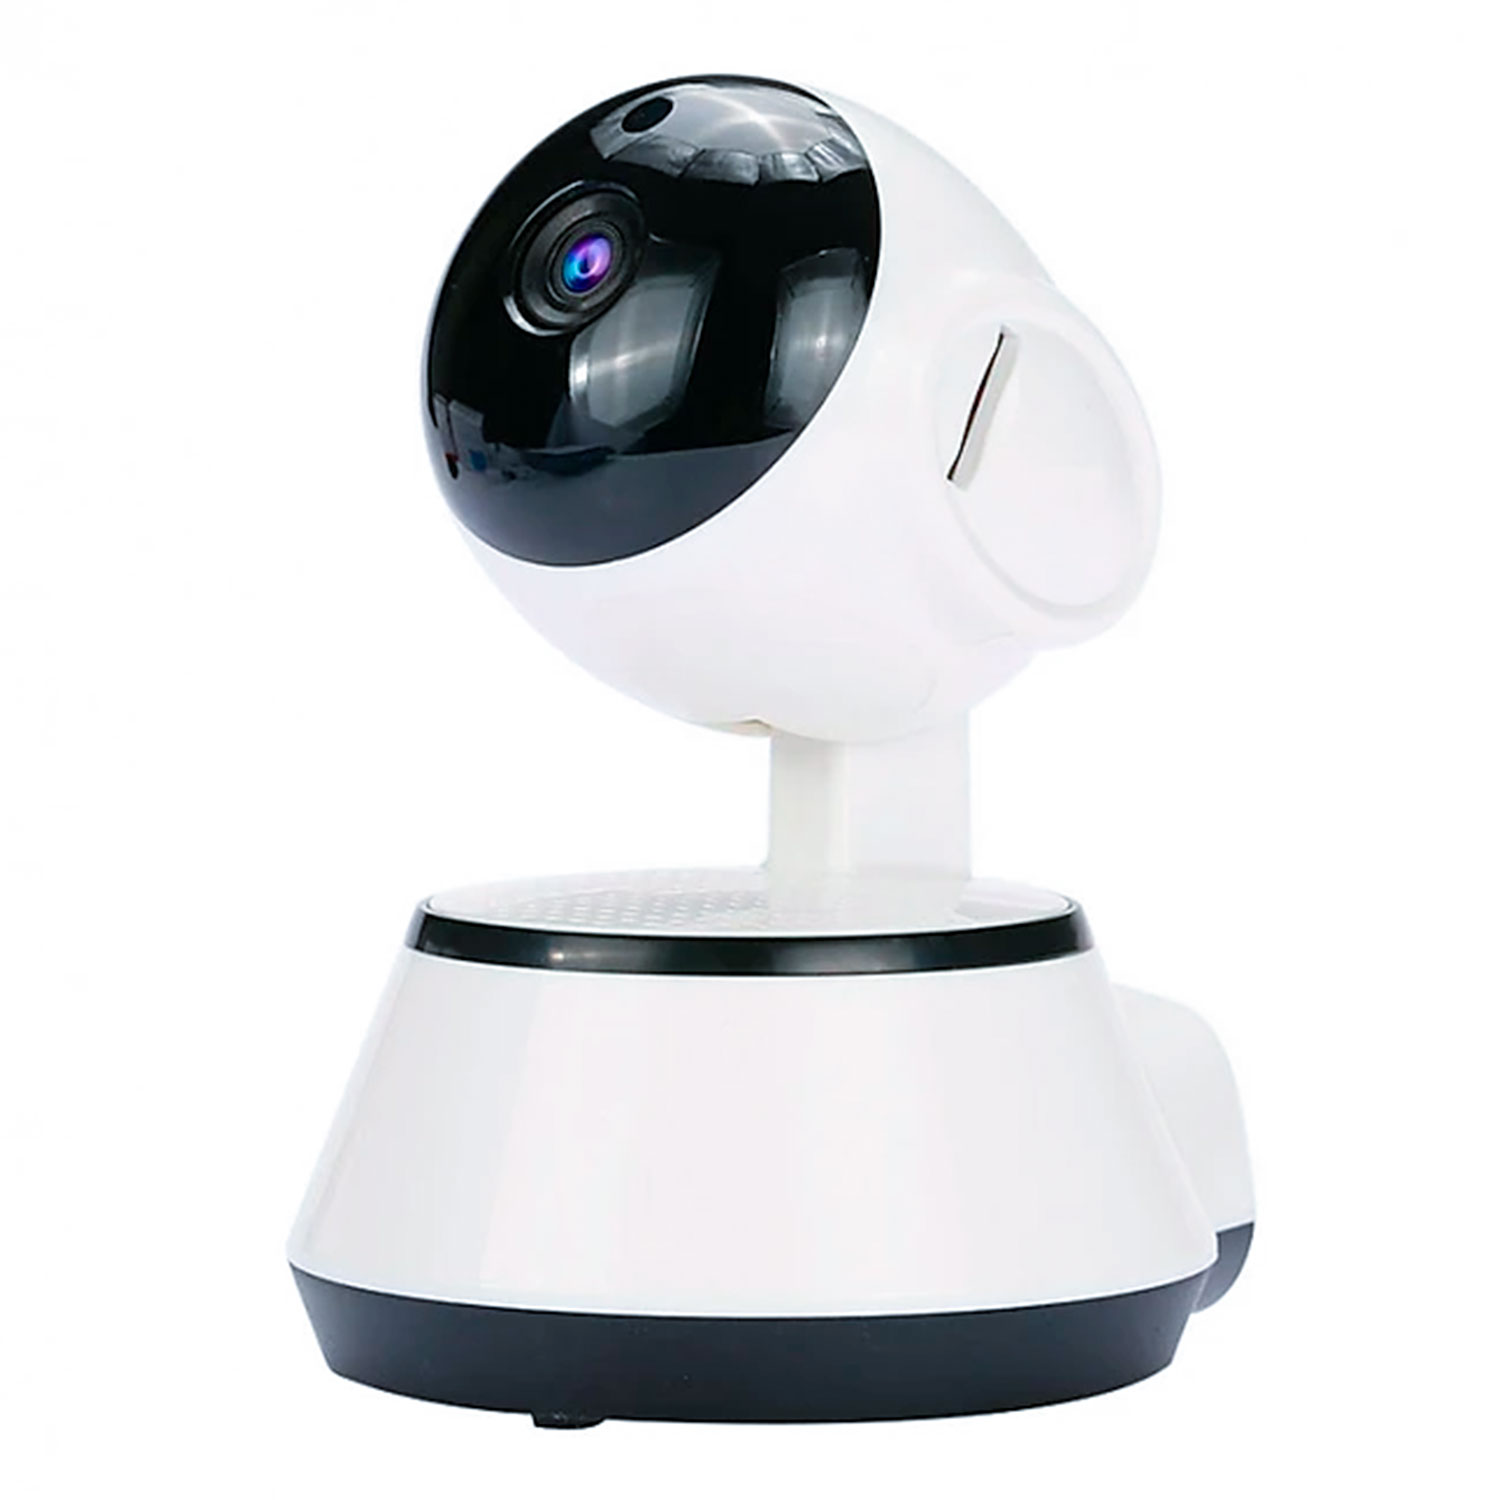 Câmera de Segurança Smart IP-07 HD 4MP WiFi - Branco